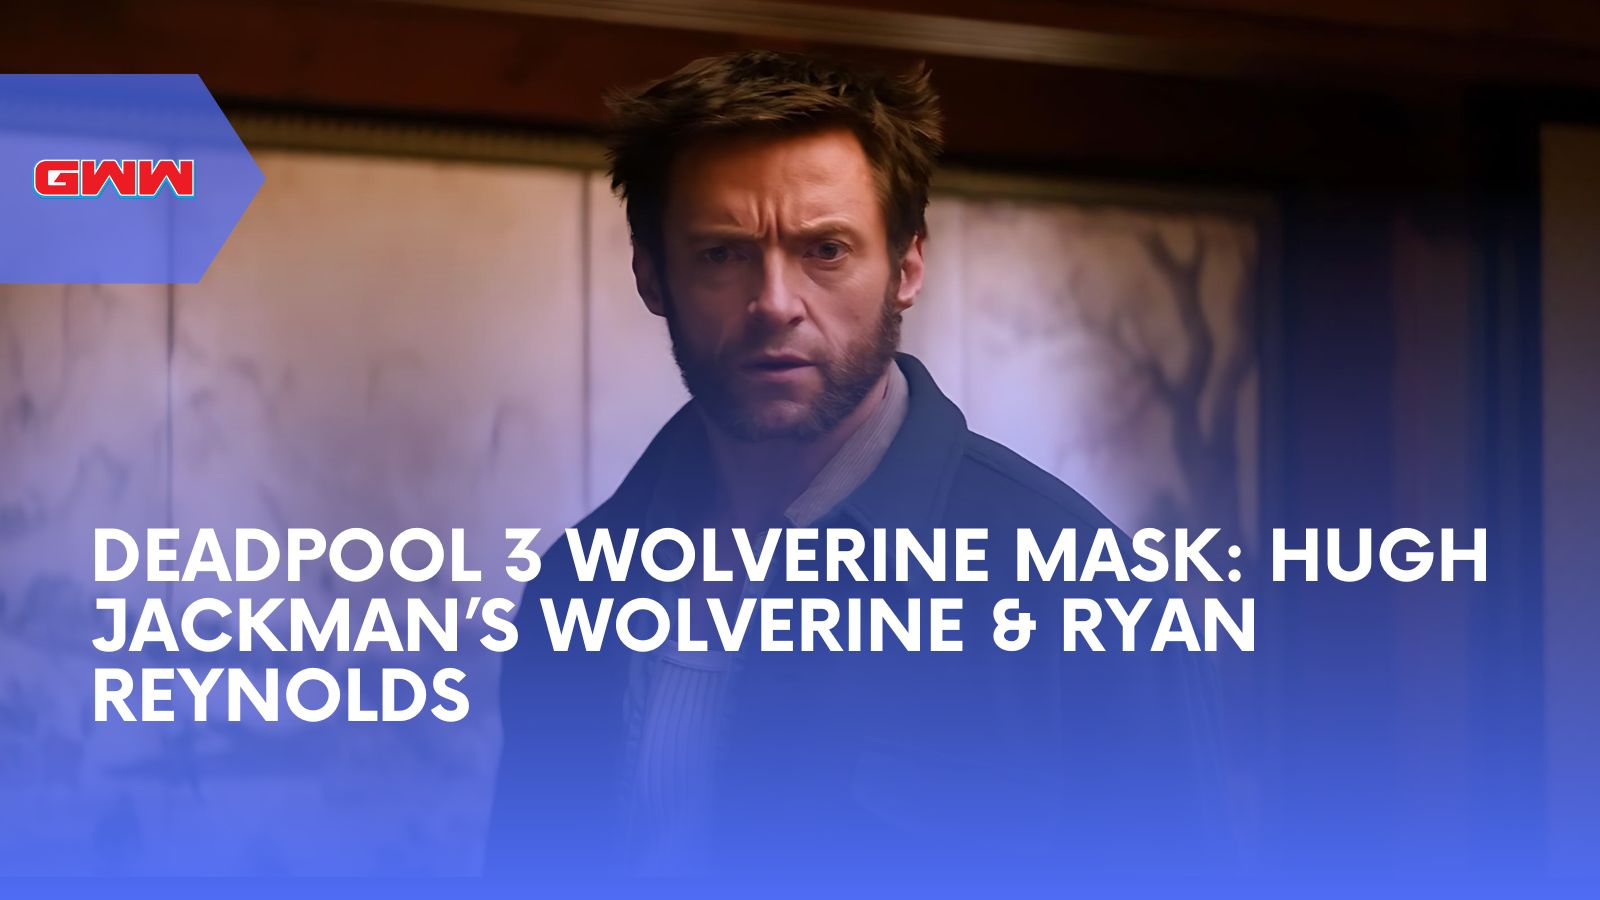 Deadpool 3 Wolverine Mask: Hugh Jackman’s Wolverine & Ryan Reynolds